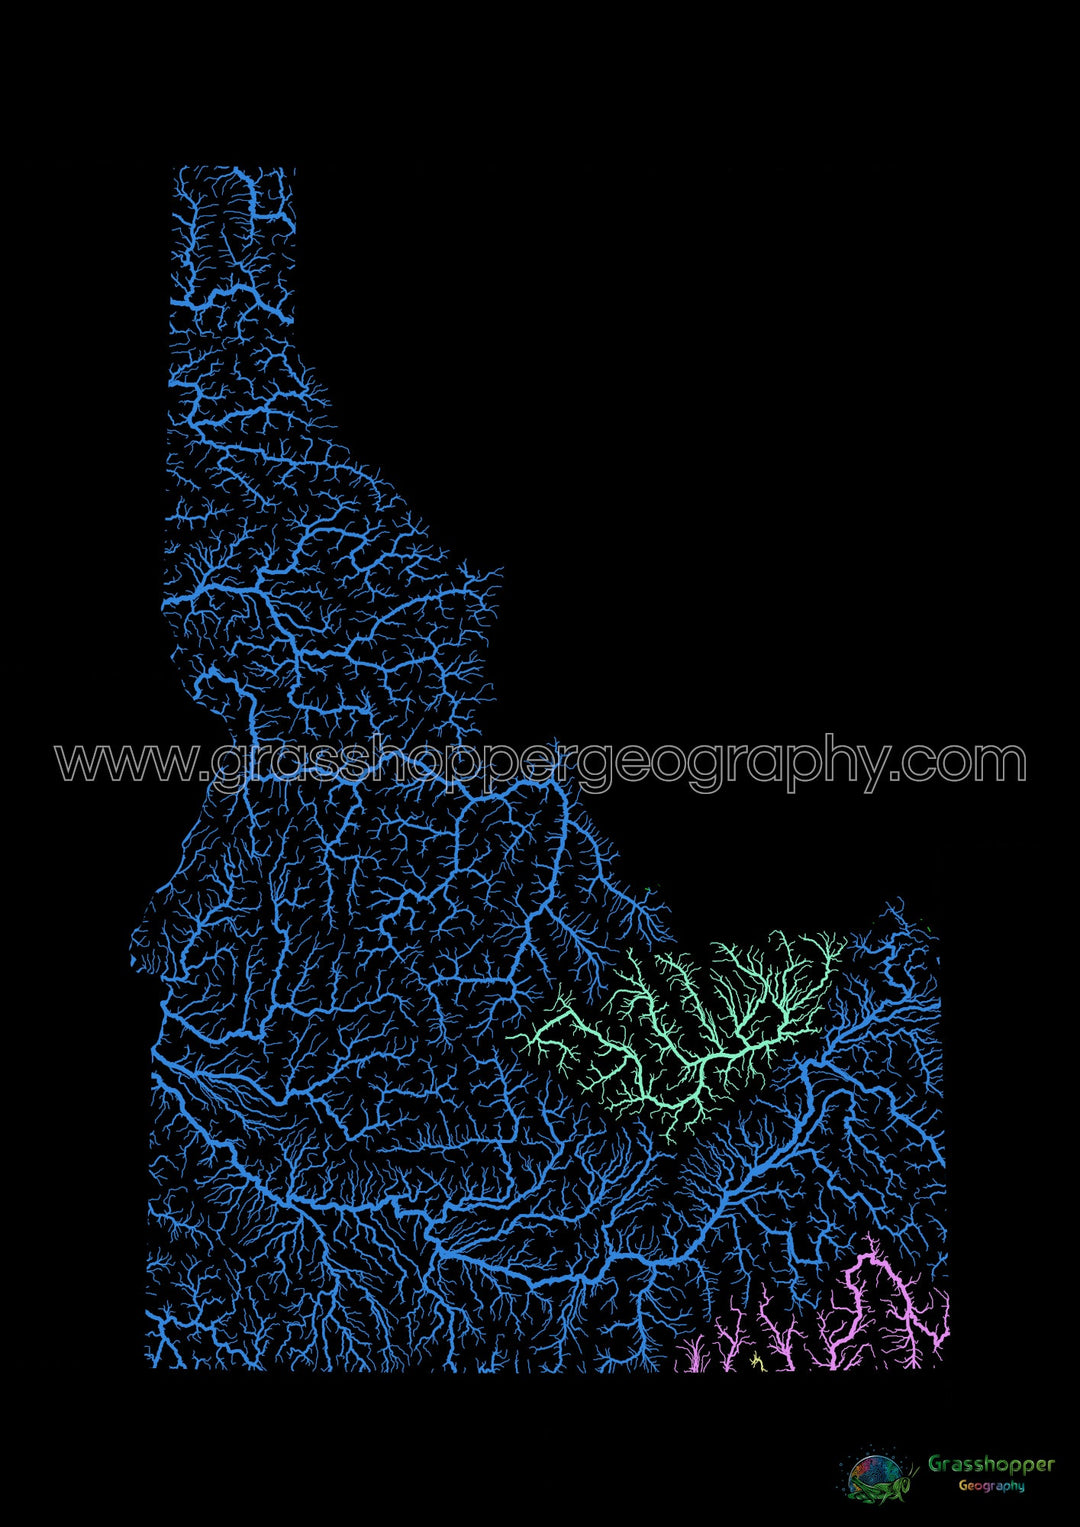 Idaho - Carte du bassin fluvial, arc-en-ciel sur noir - Fine Art Print